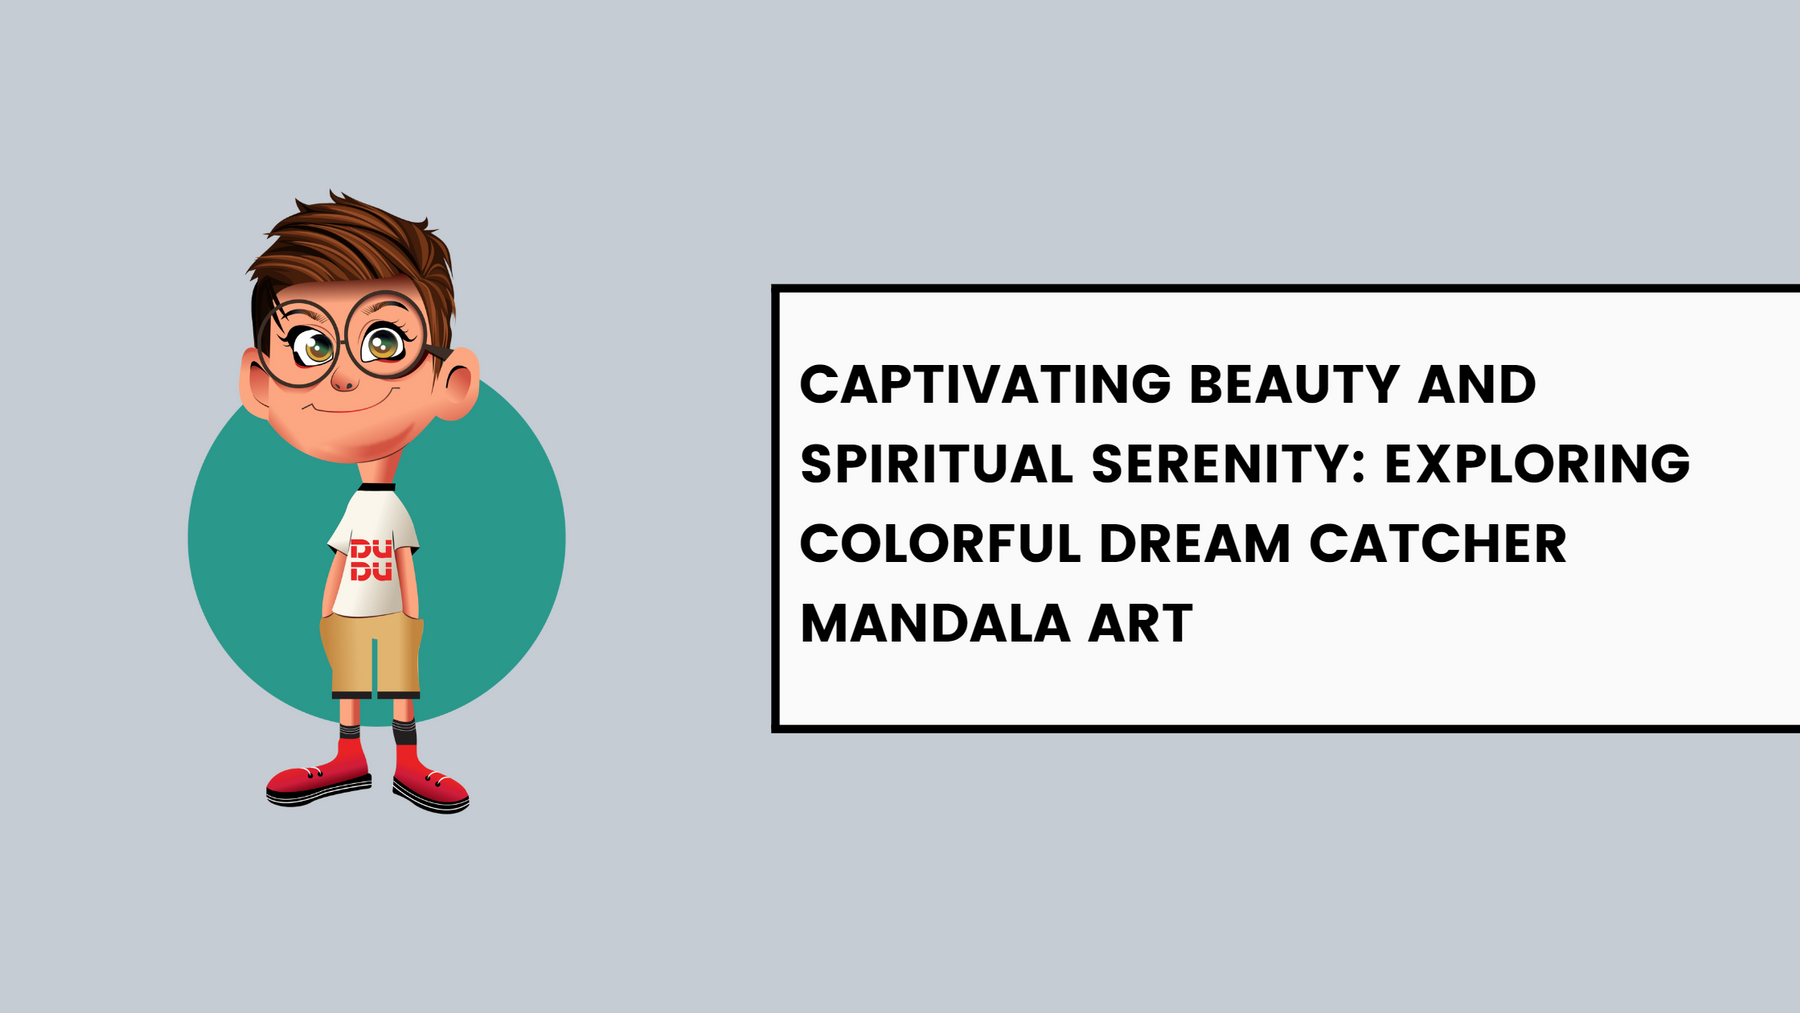 Captivating Beauty and Spiritual Serenity: Exploring Colorful Dream Catcher Mandala Art